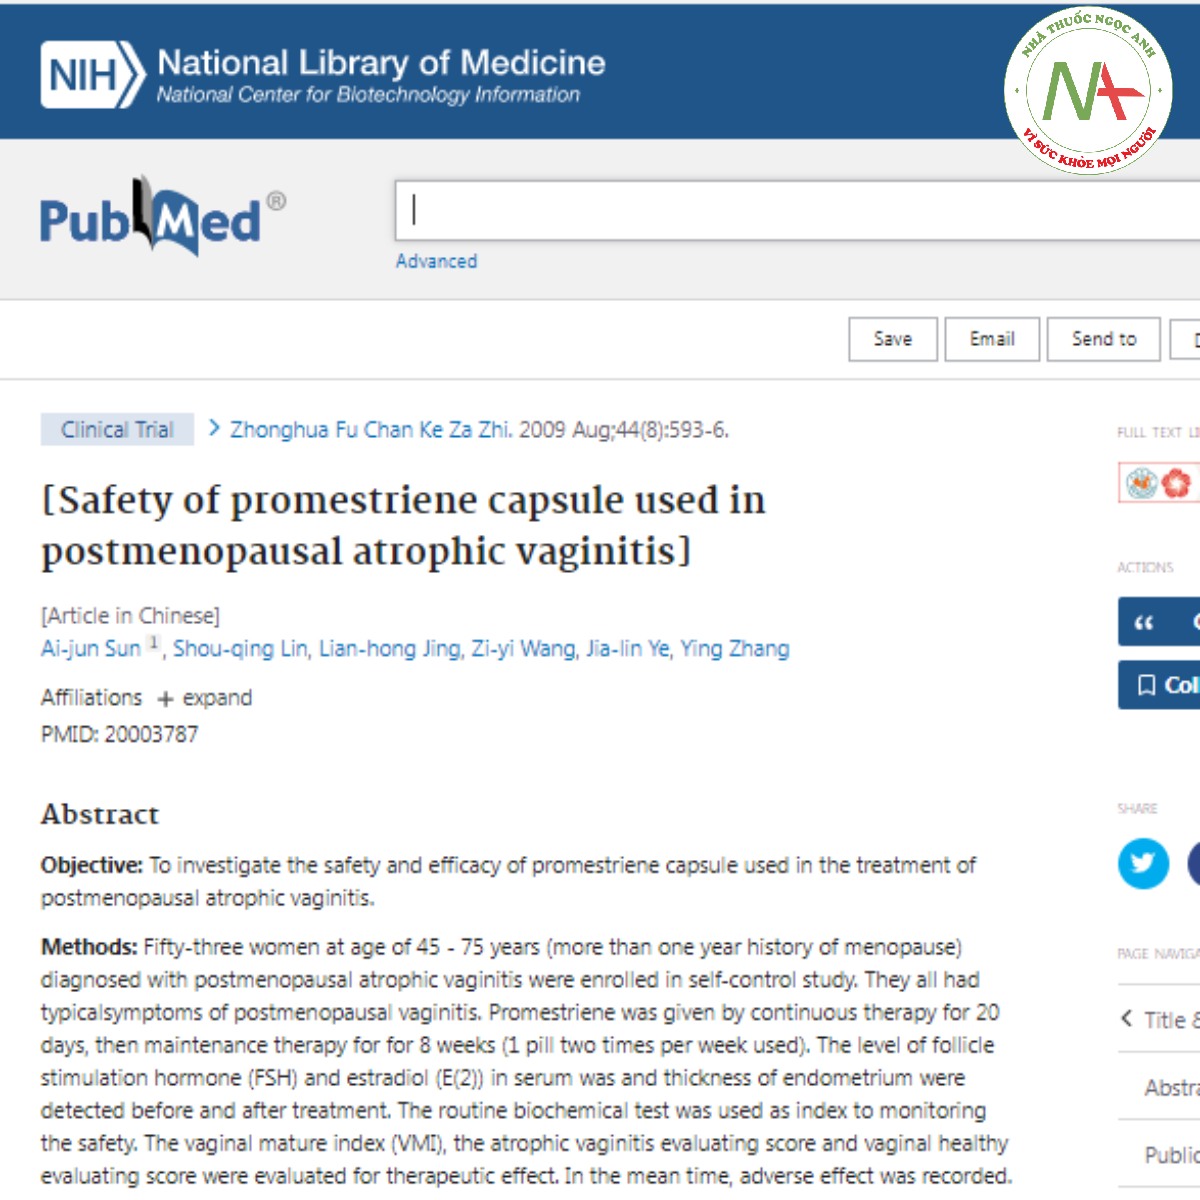 Safety of promestriene capsule used in postmenopausal atrophic vaginitis